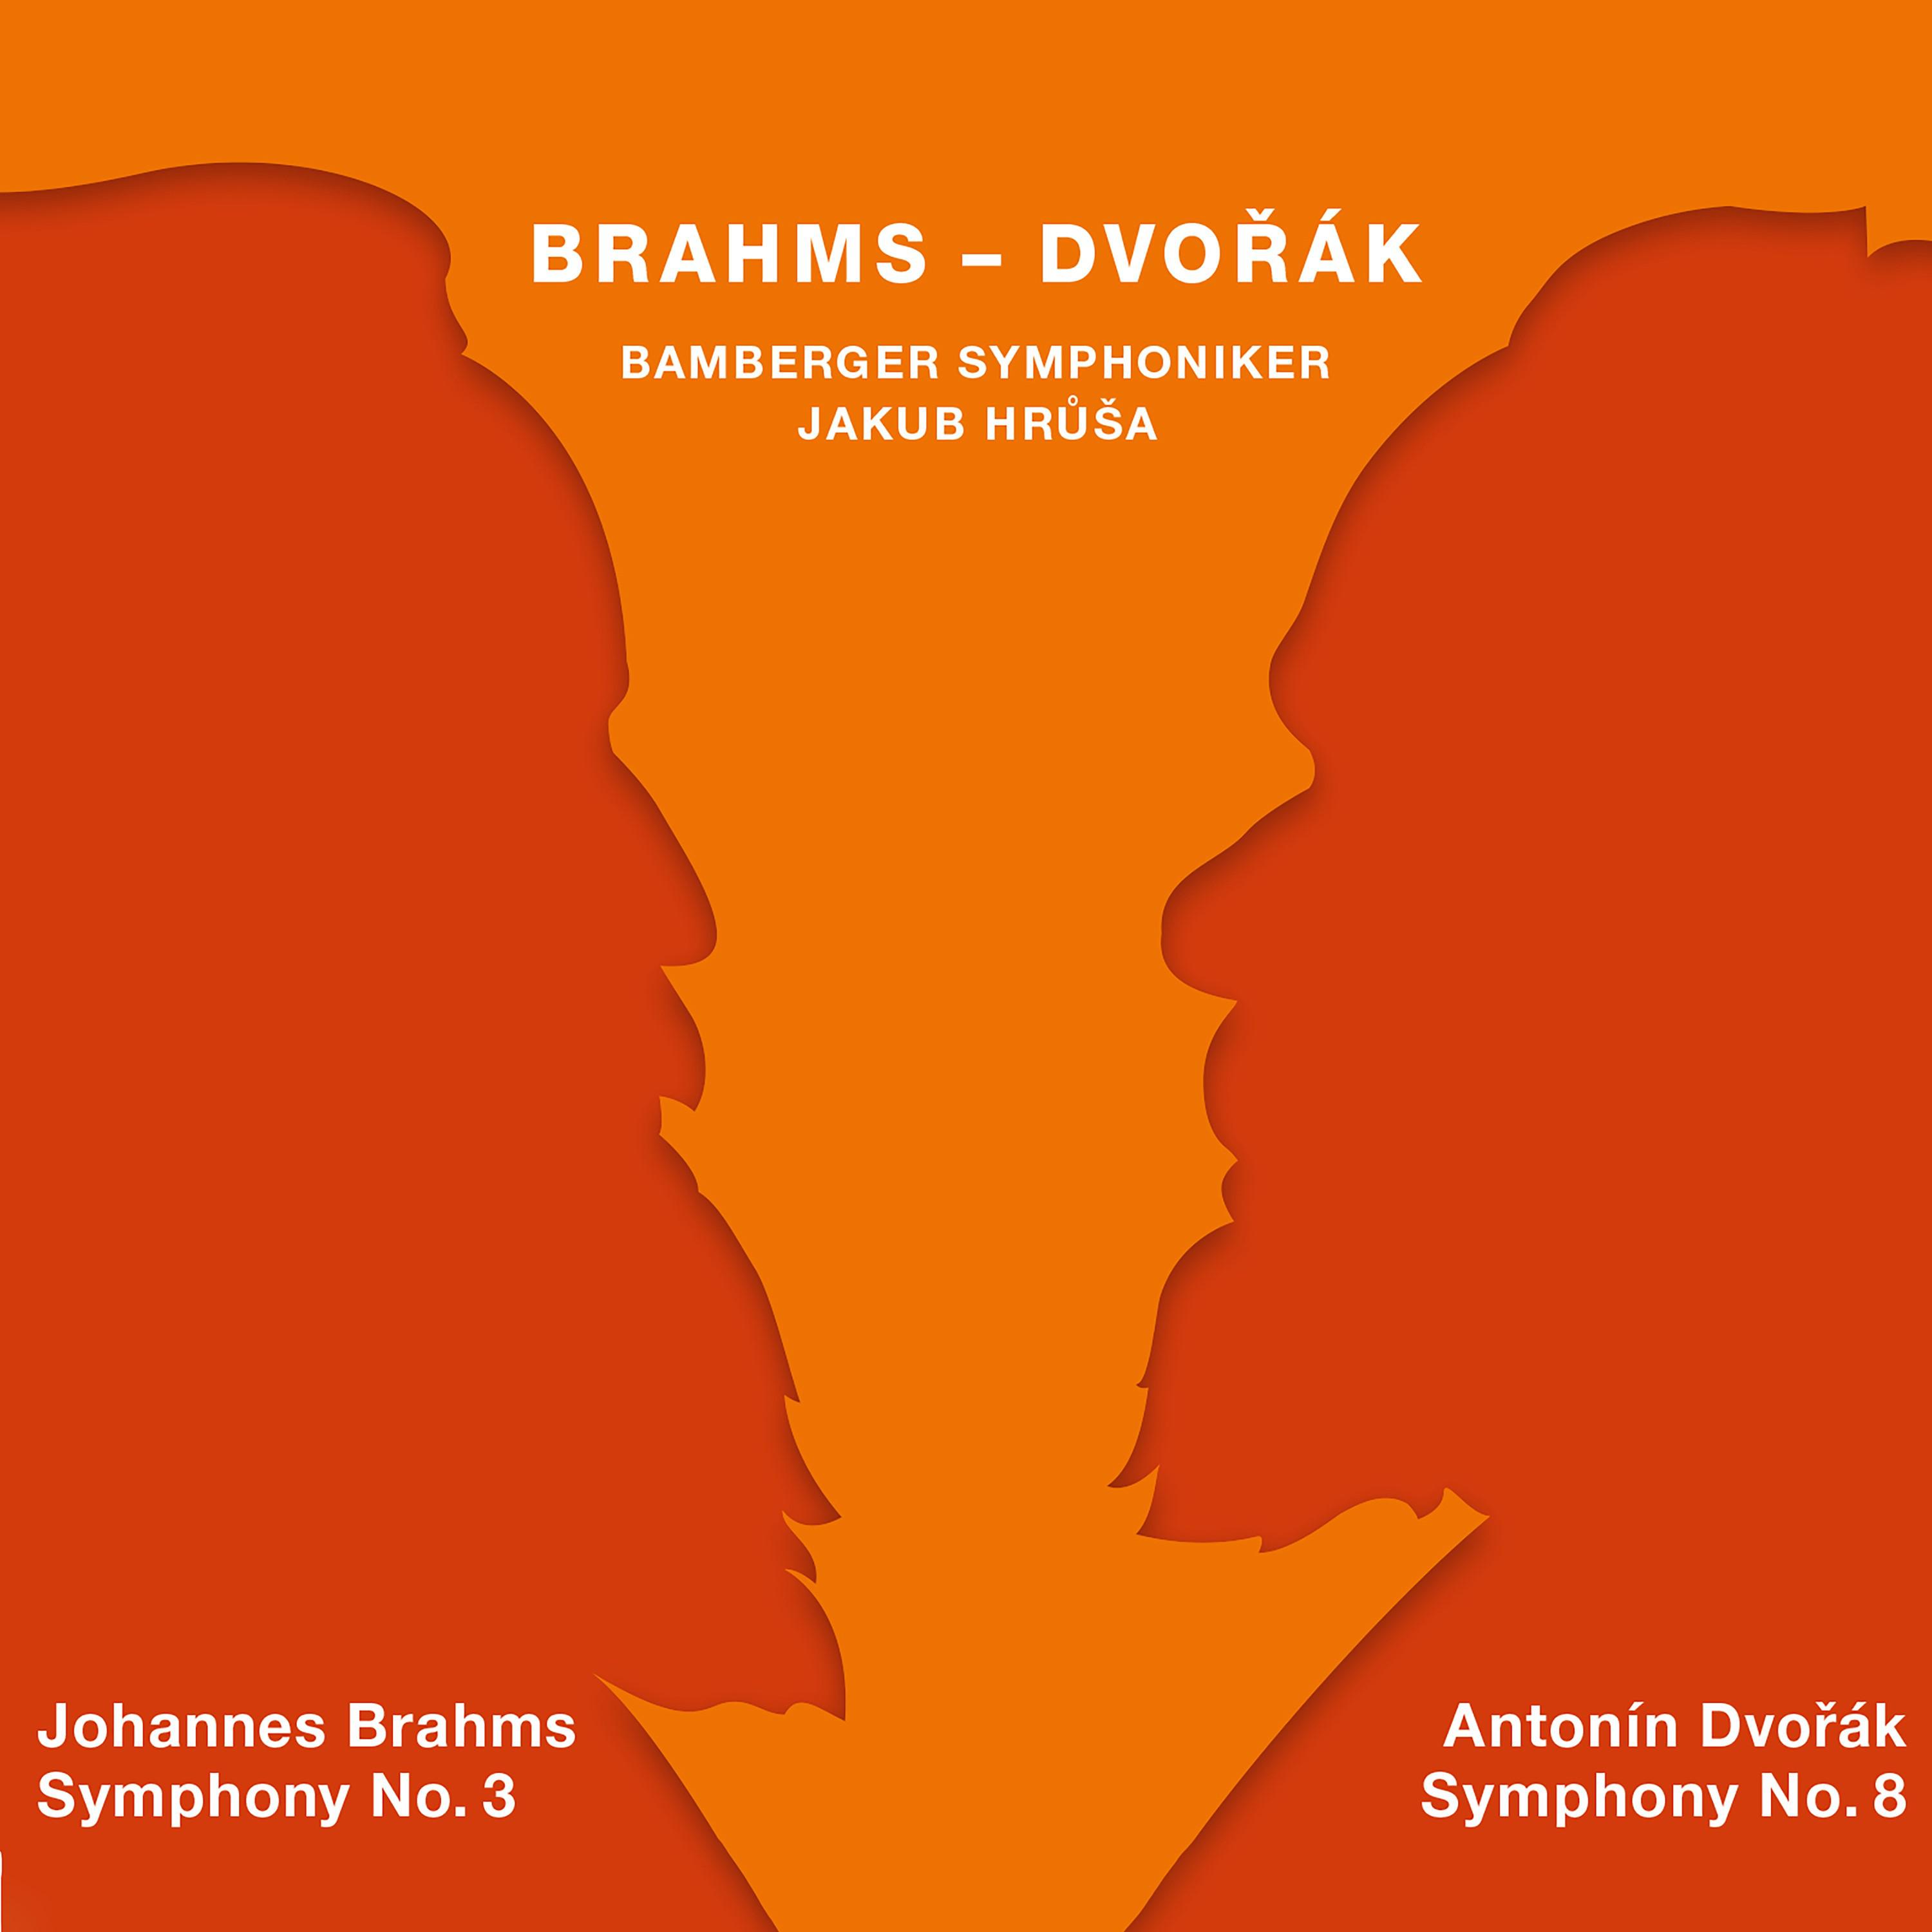 Brahms: Symphony No. 3 in F Major  Dvoa k: Symphony No. 8 in G Major